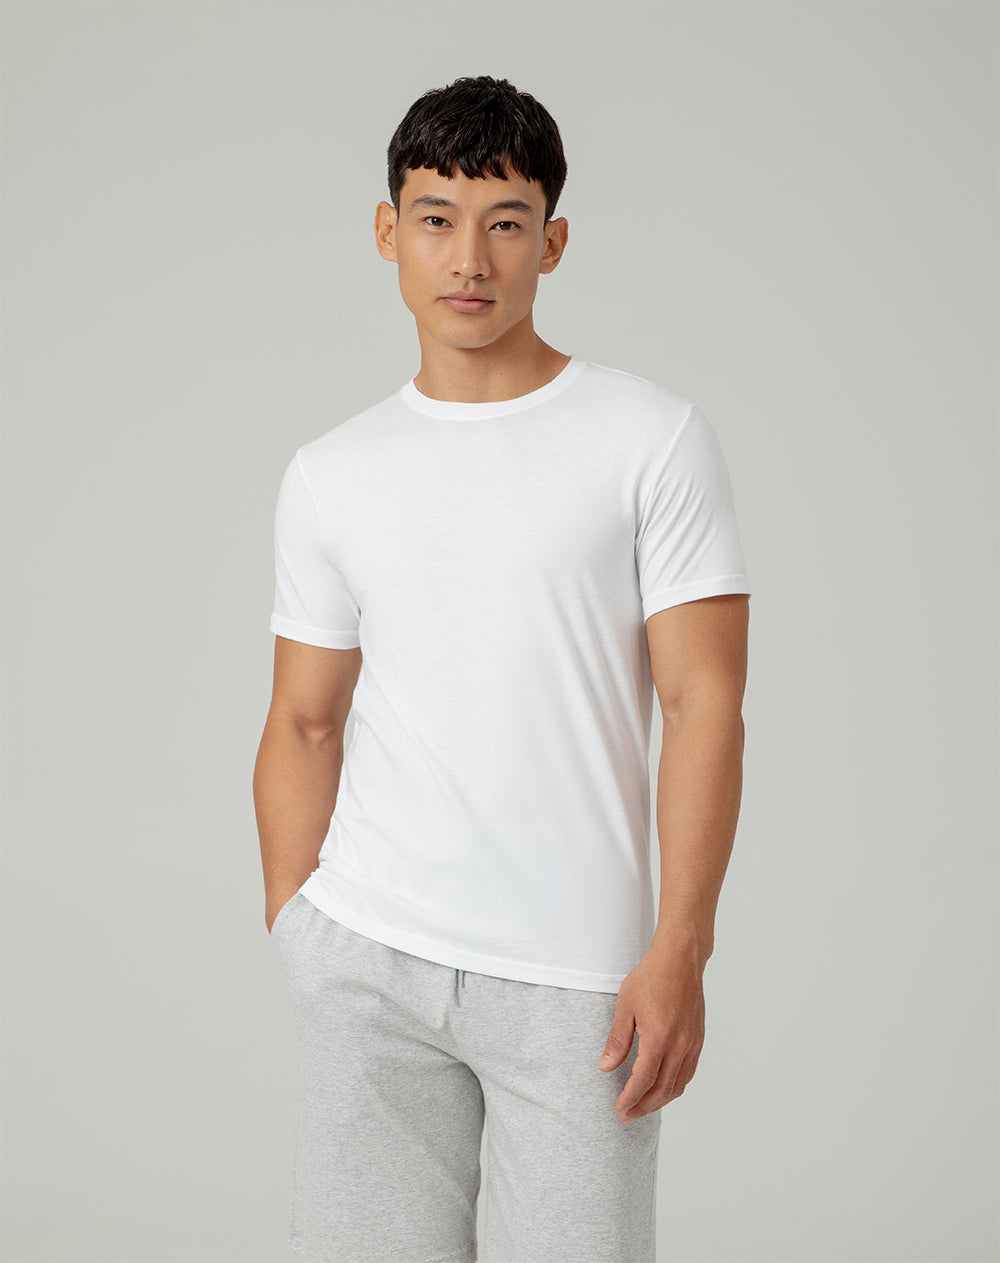 Camiseta slim fit manga corta blanca